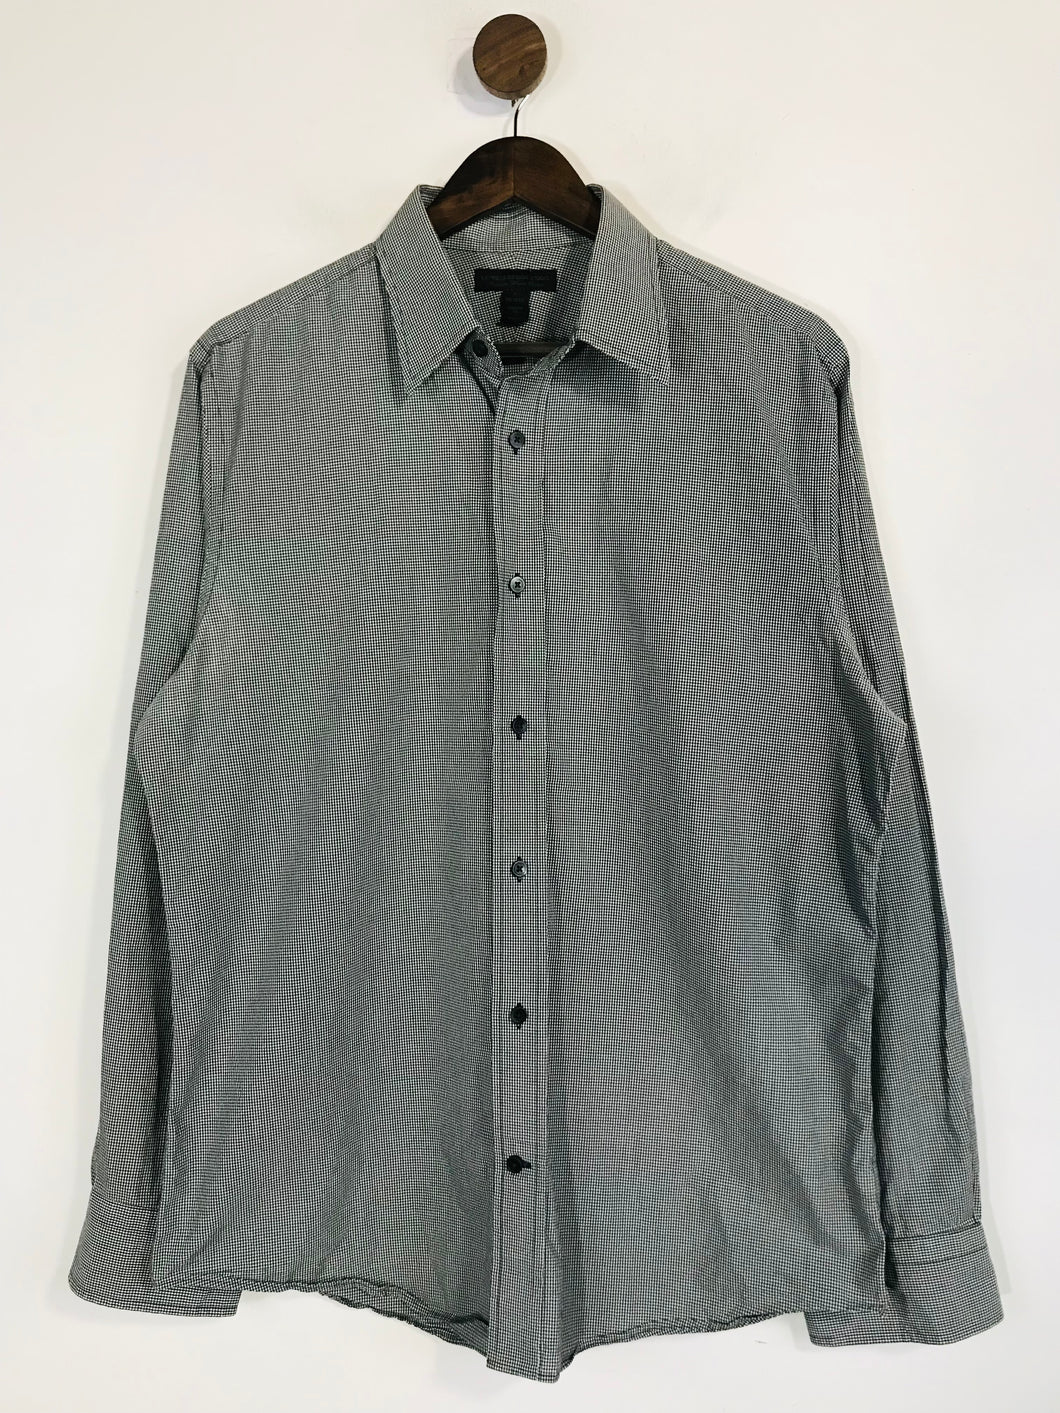 Express Men's Cotton Check Gingham Button-Up Shirt | L | Multicoloured